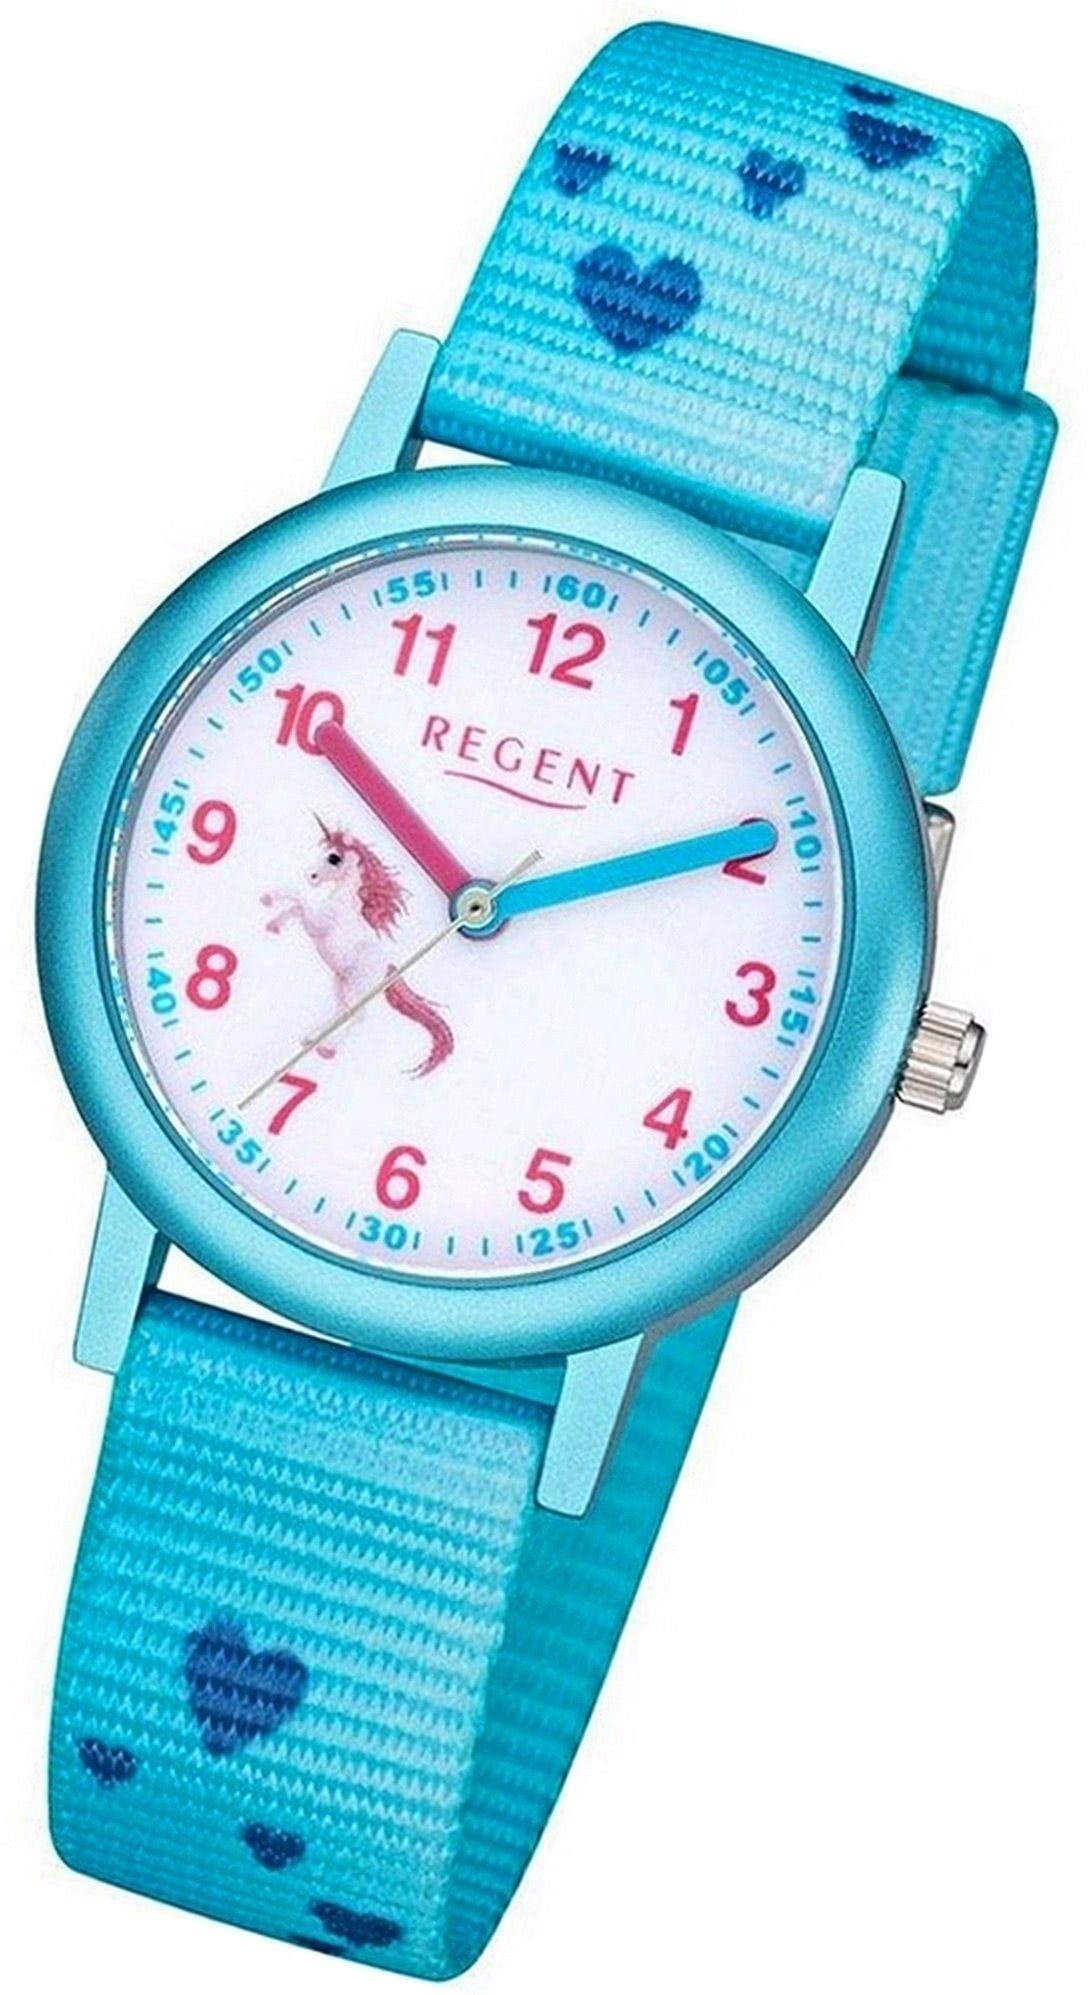 Textil Quarzuhr 29mm) Kinderuhr Textilarmband Uhr Regent klein blau, Gehäuse, Regent F-1208 rundes (ca. Kinder Analog,